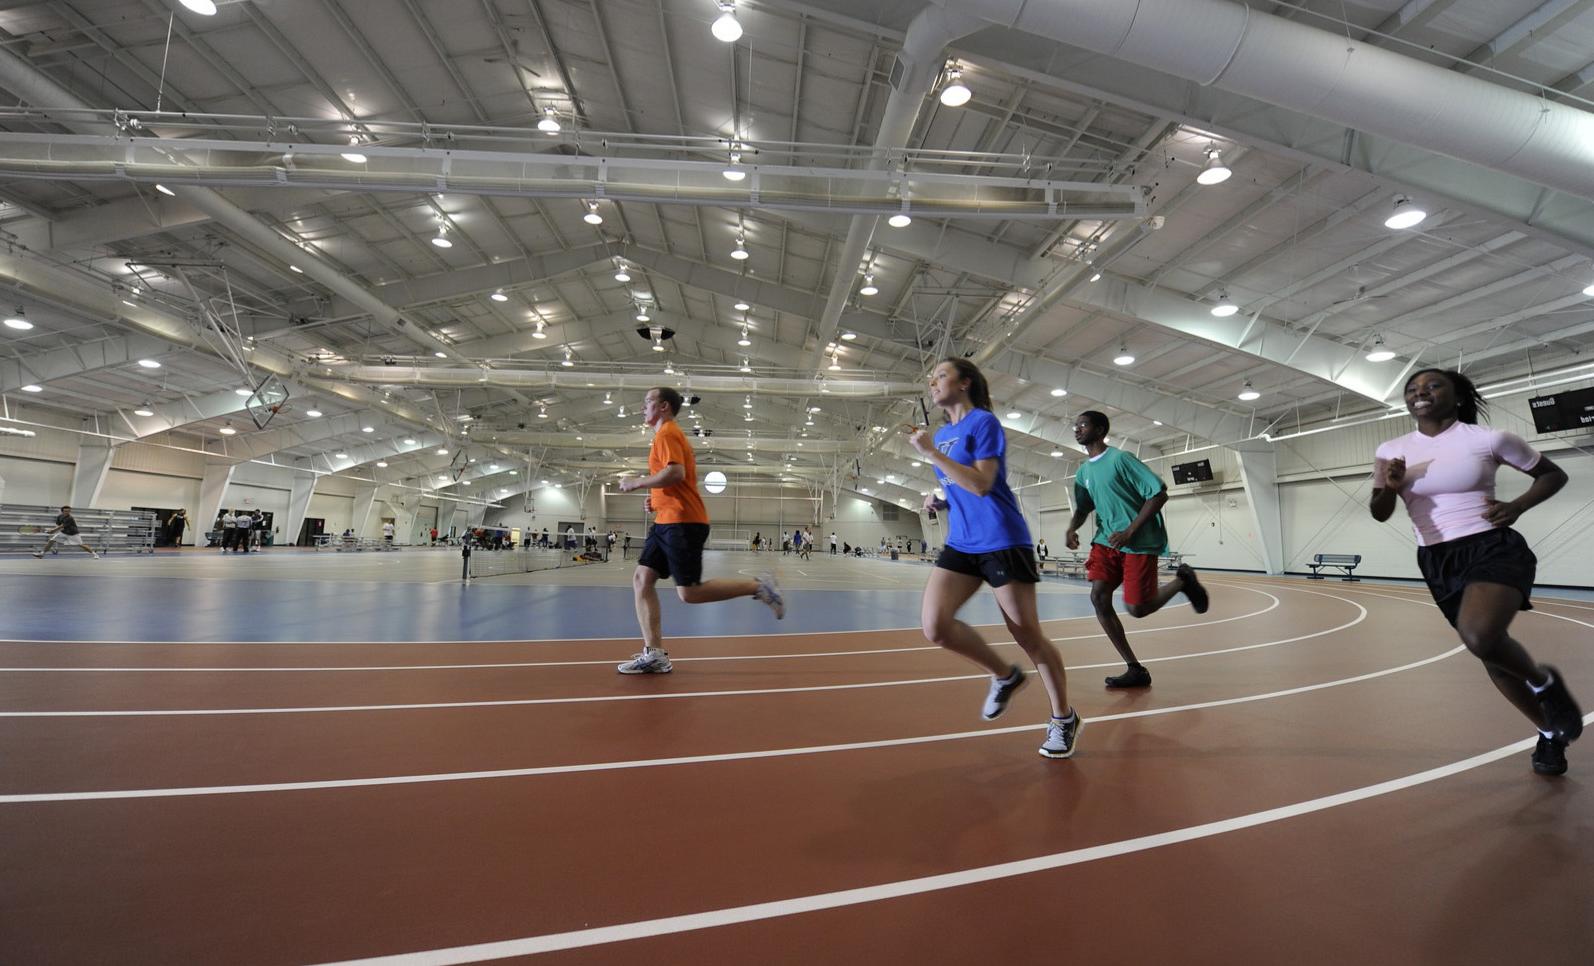 VinU students running around an indoor track.